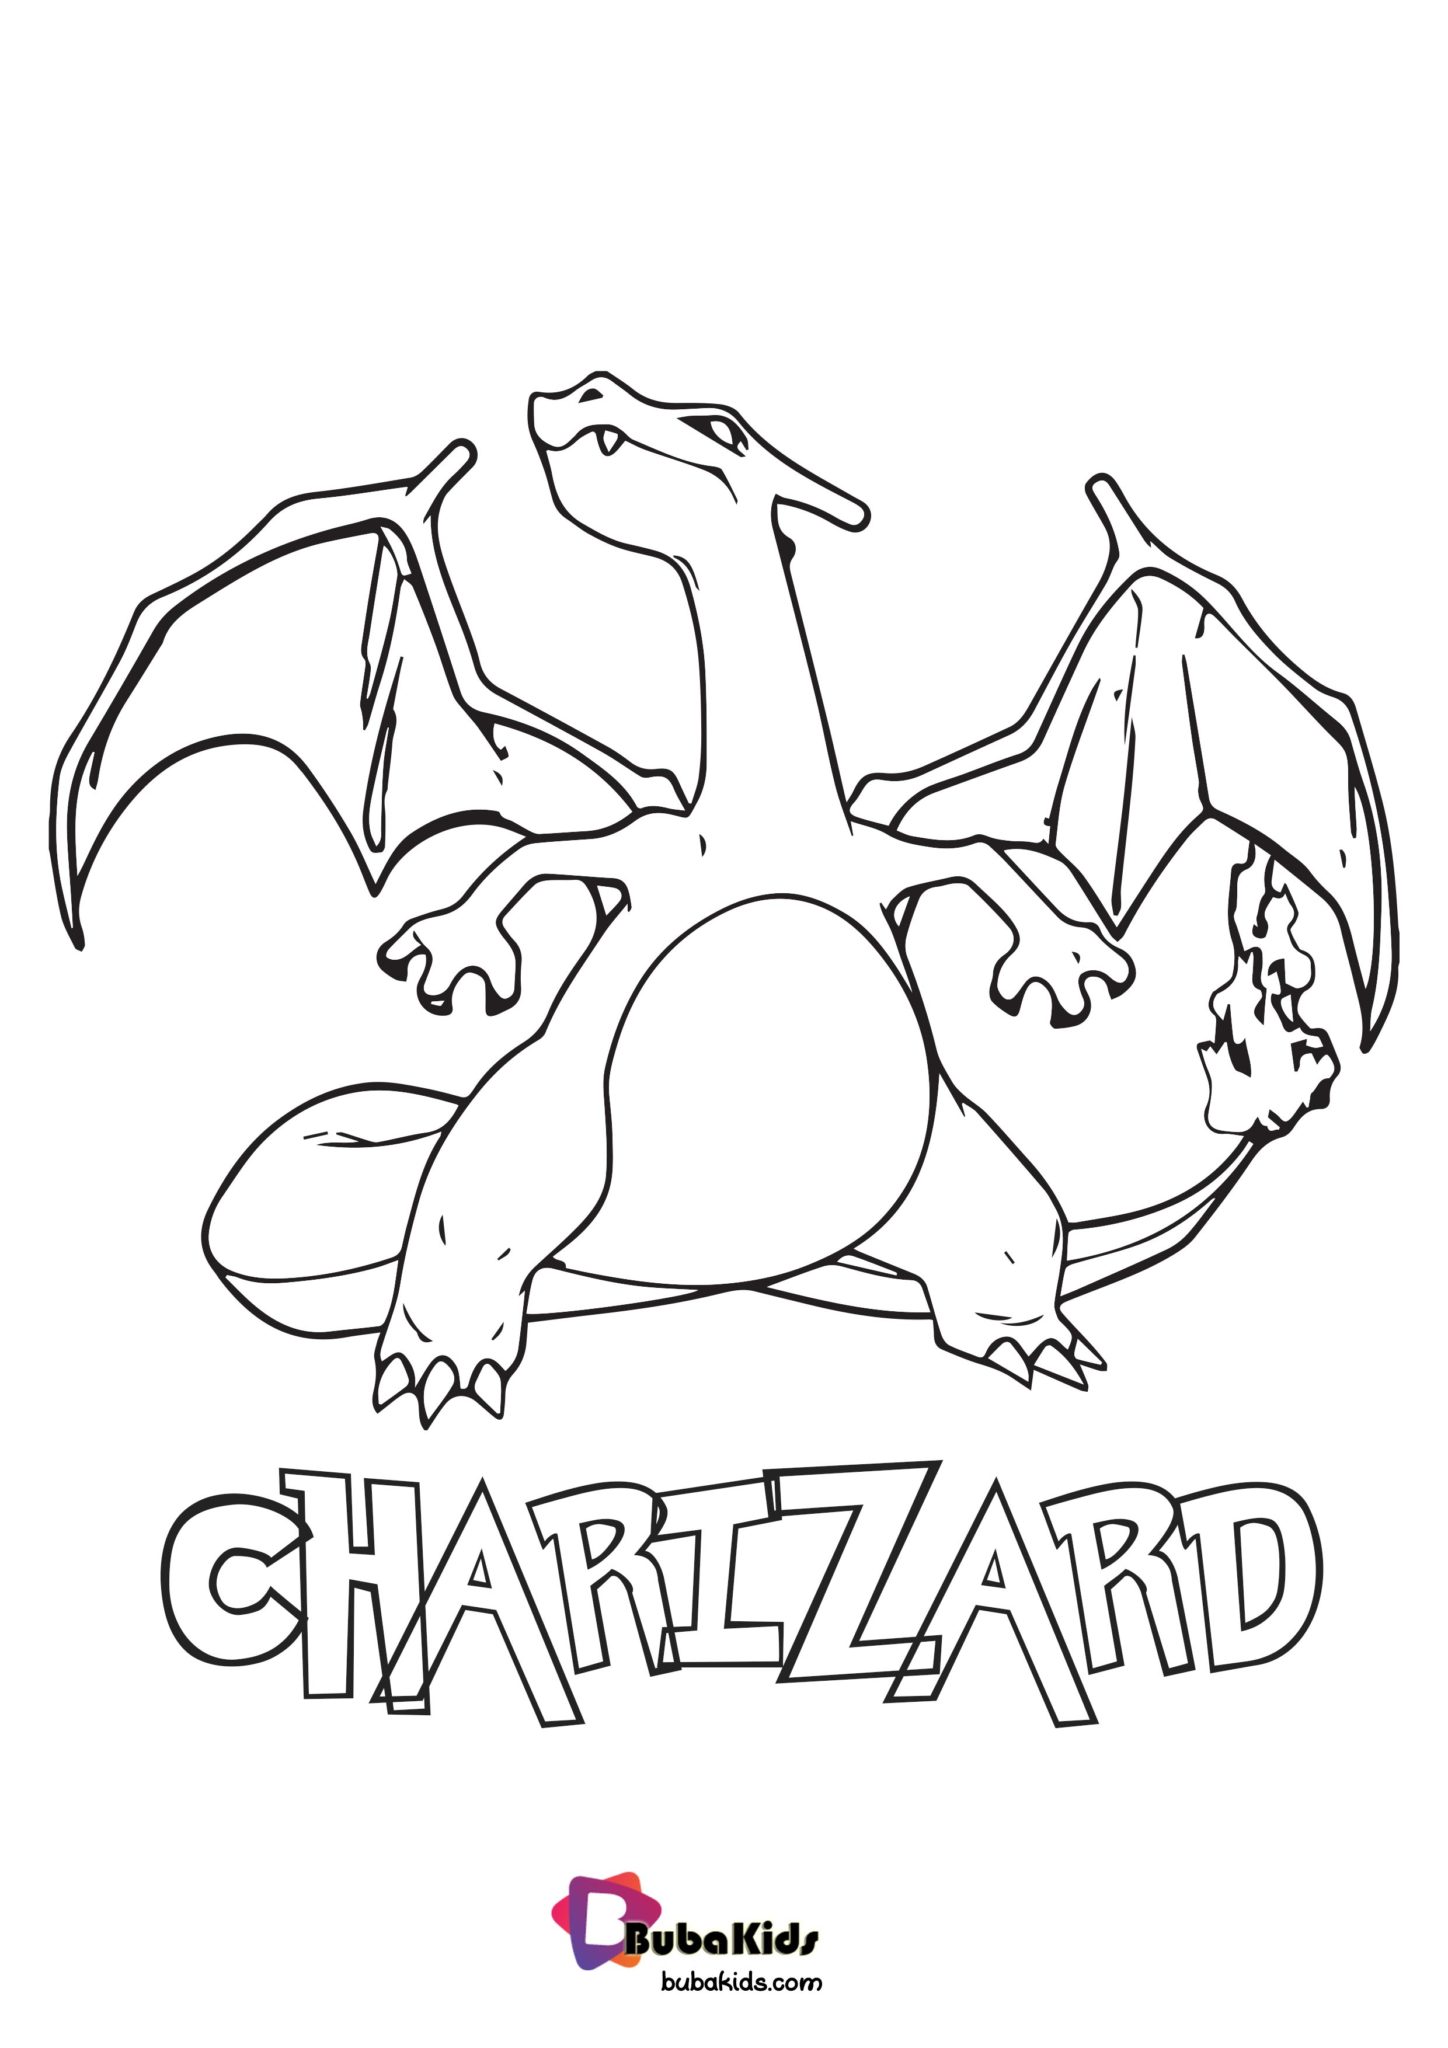 charizard-pokemon-coloring-page-bubakids-ukup